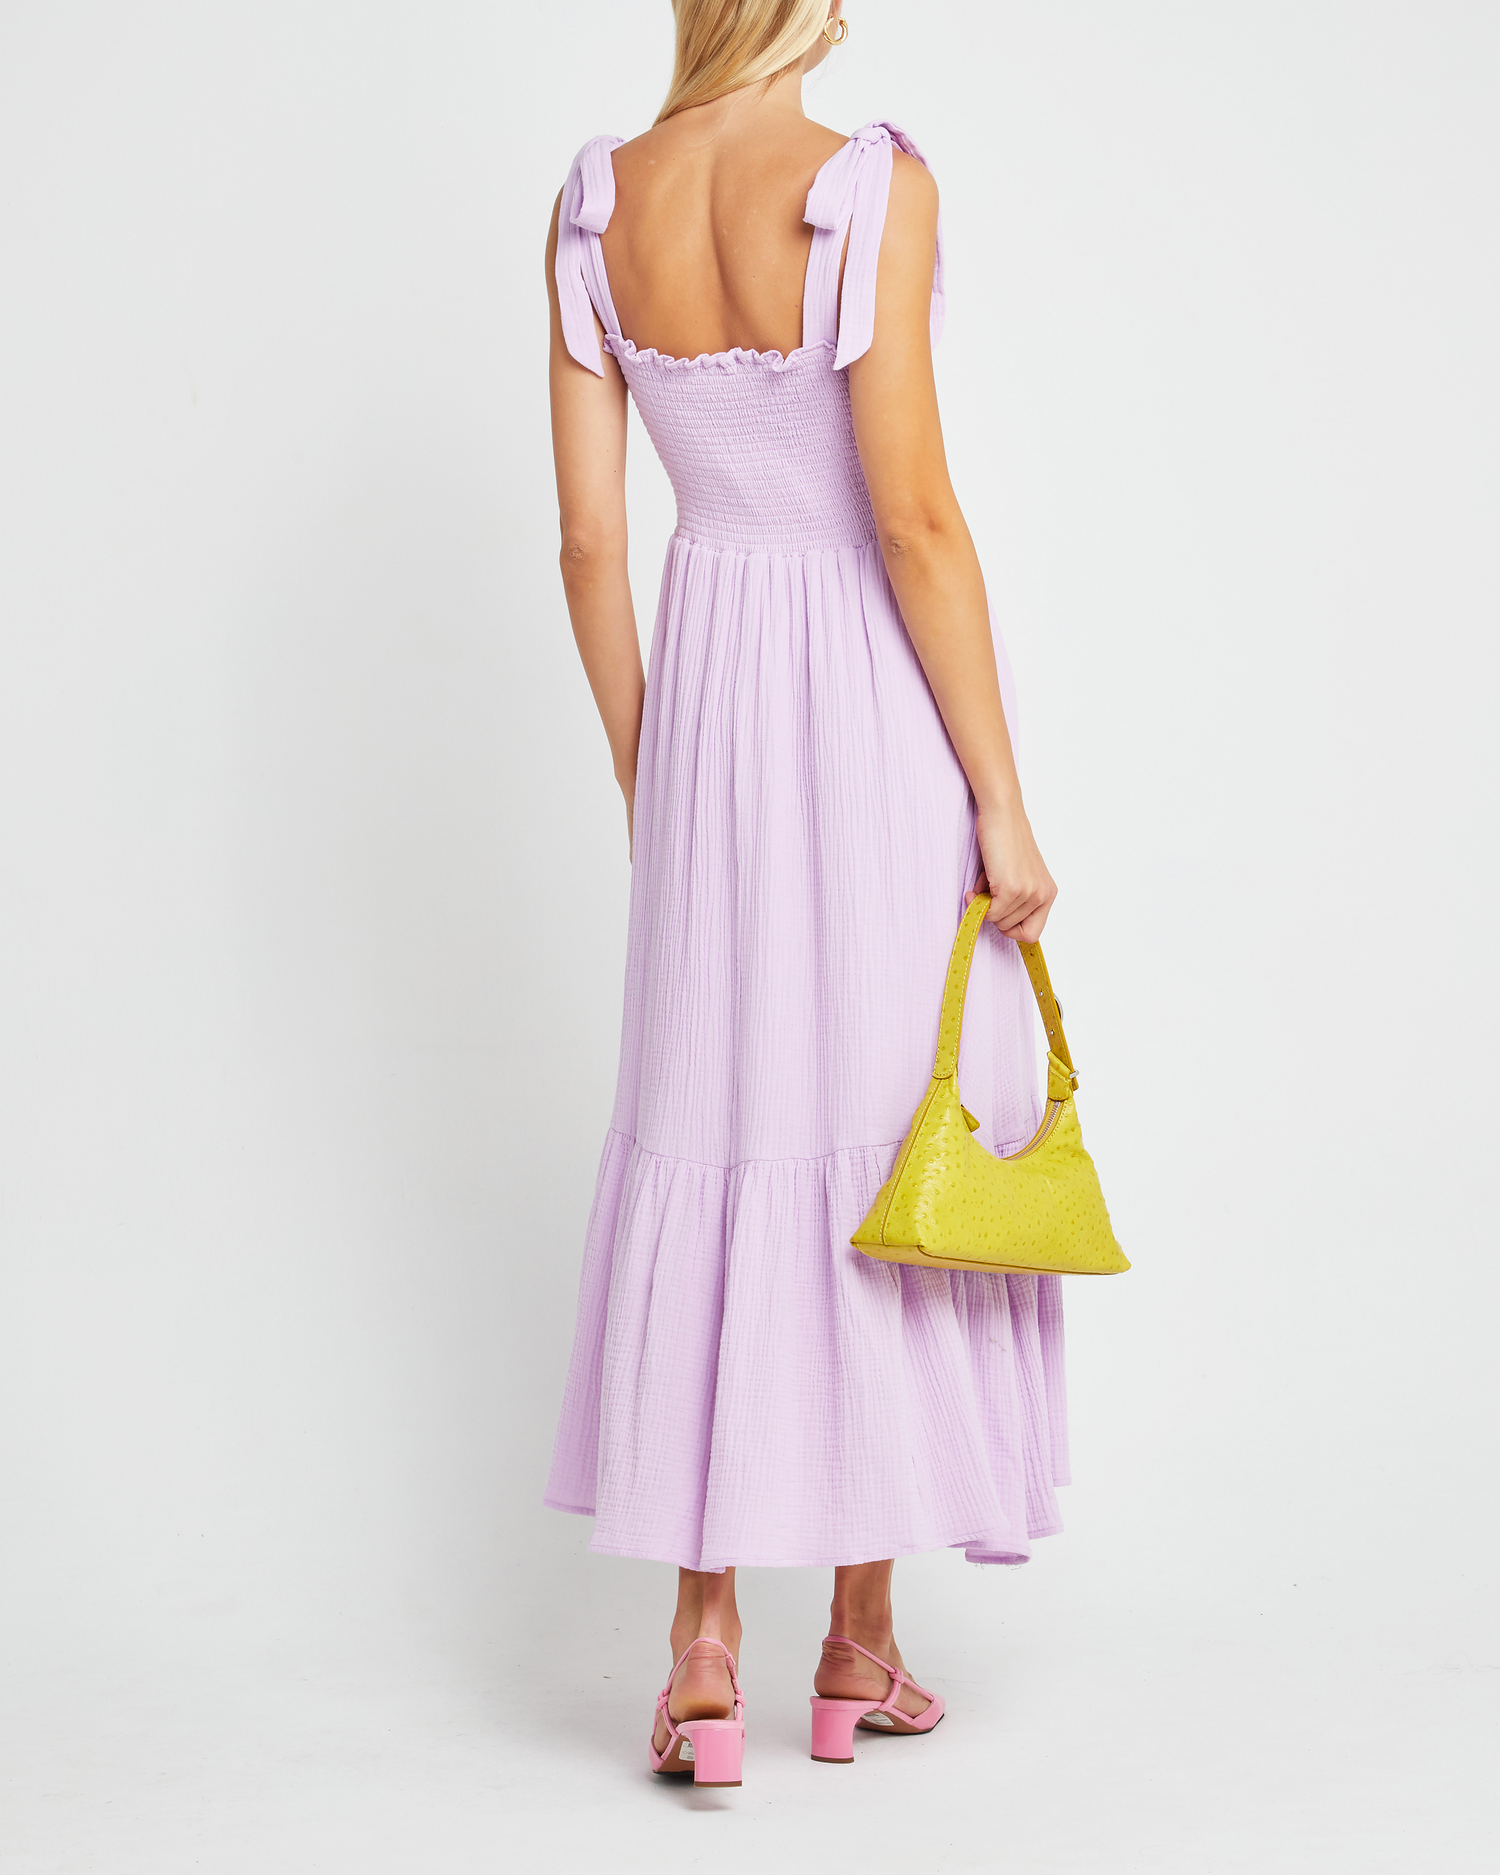 Fifth image of Cotton Winnie Dress, a purple maxi dress, tie straps, smocked bodice